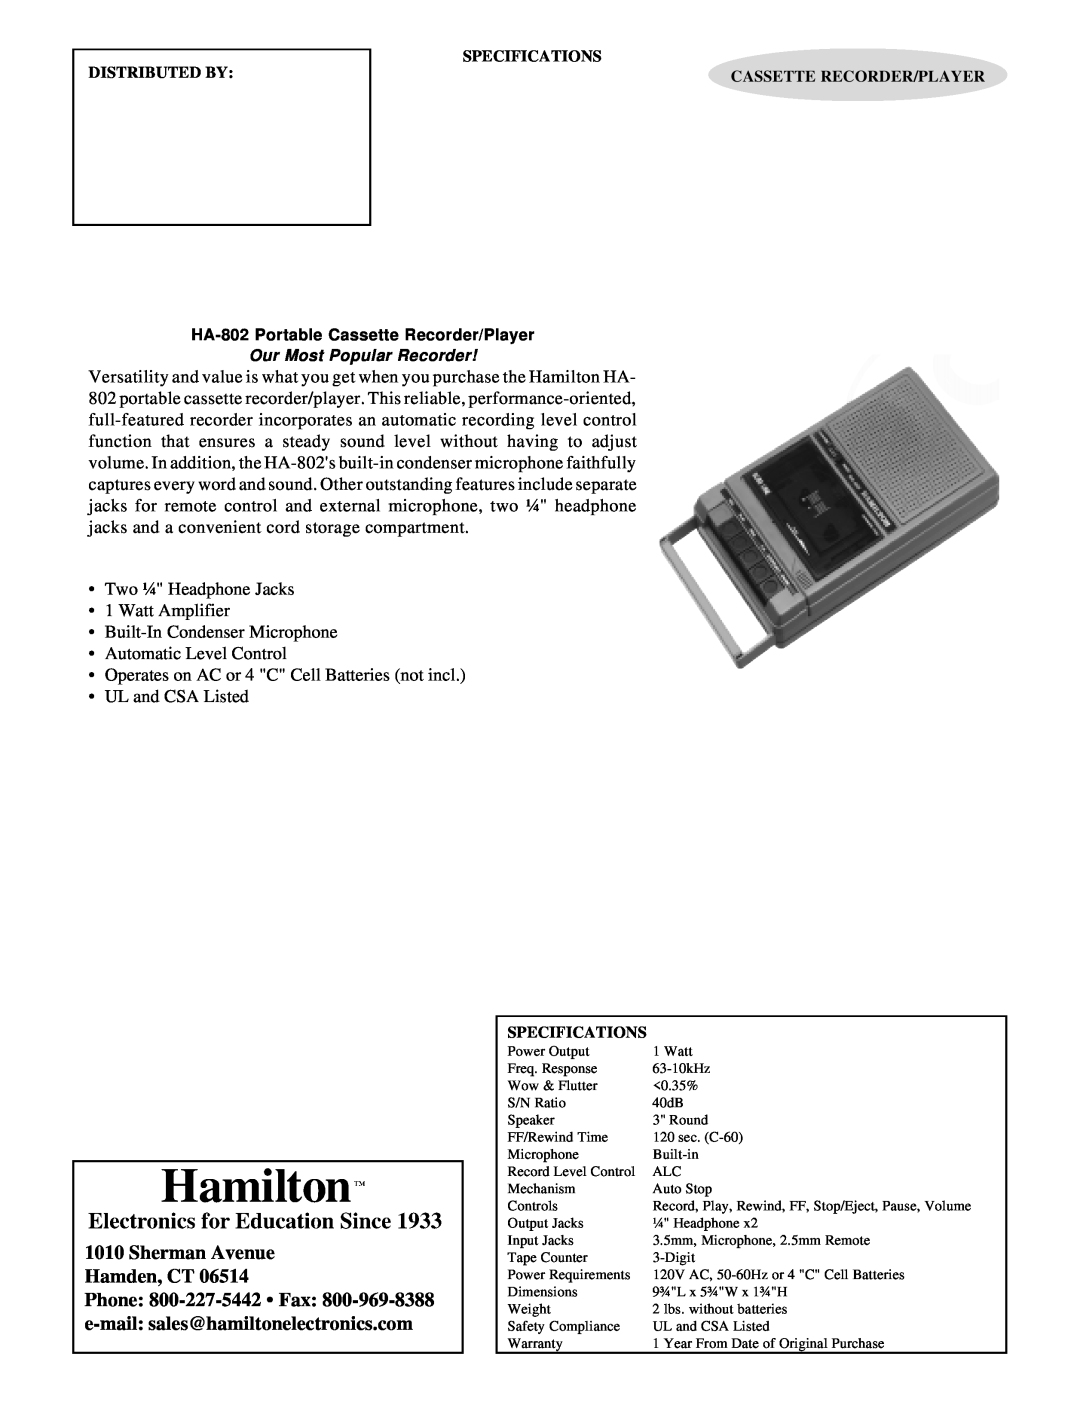 Hamilton Electronics HA-802 specifications Phone 800-227-5442 Fax, Sherman Avenue Hamden, CT 